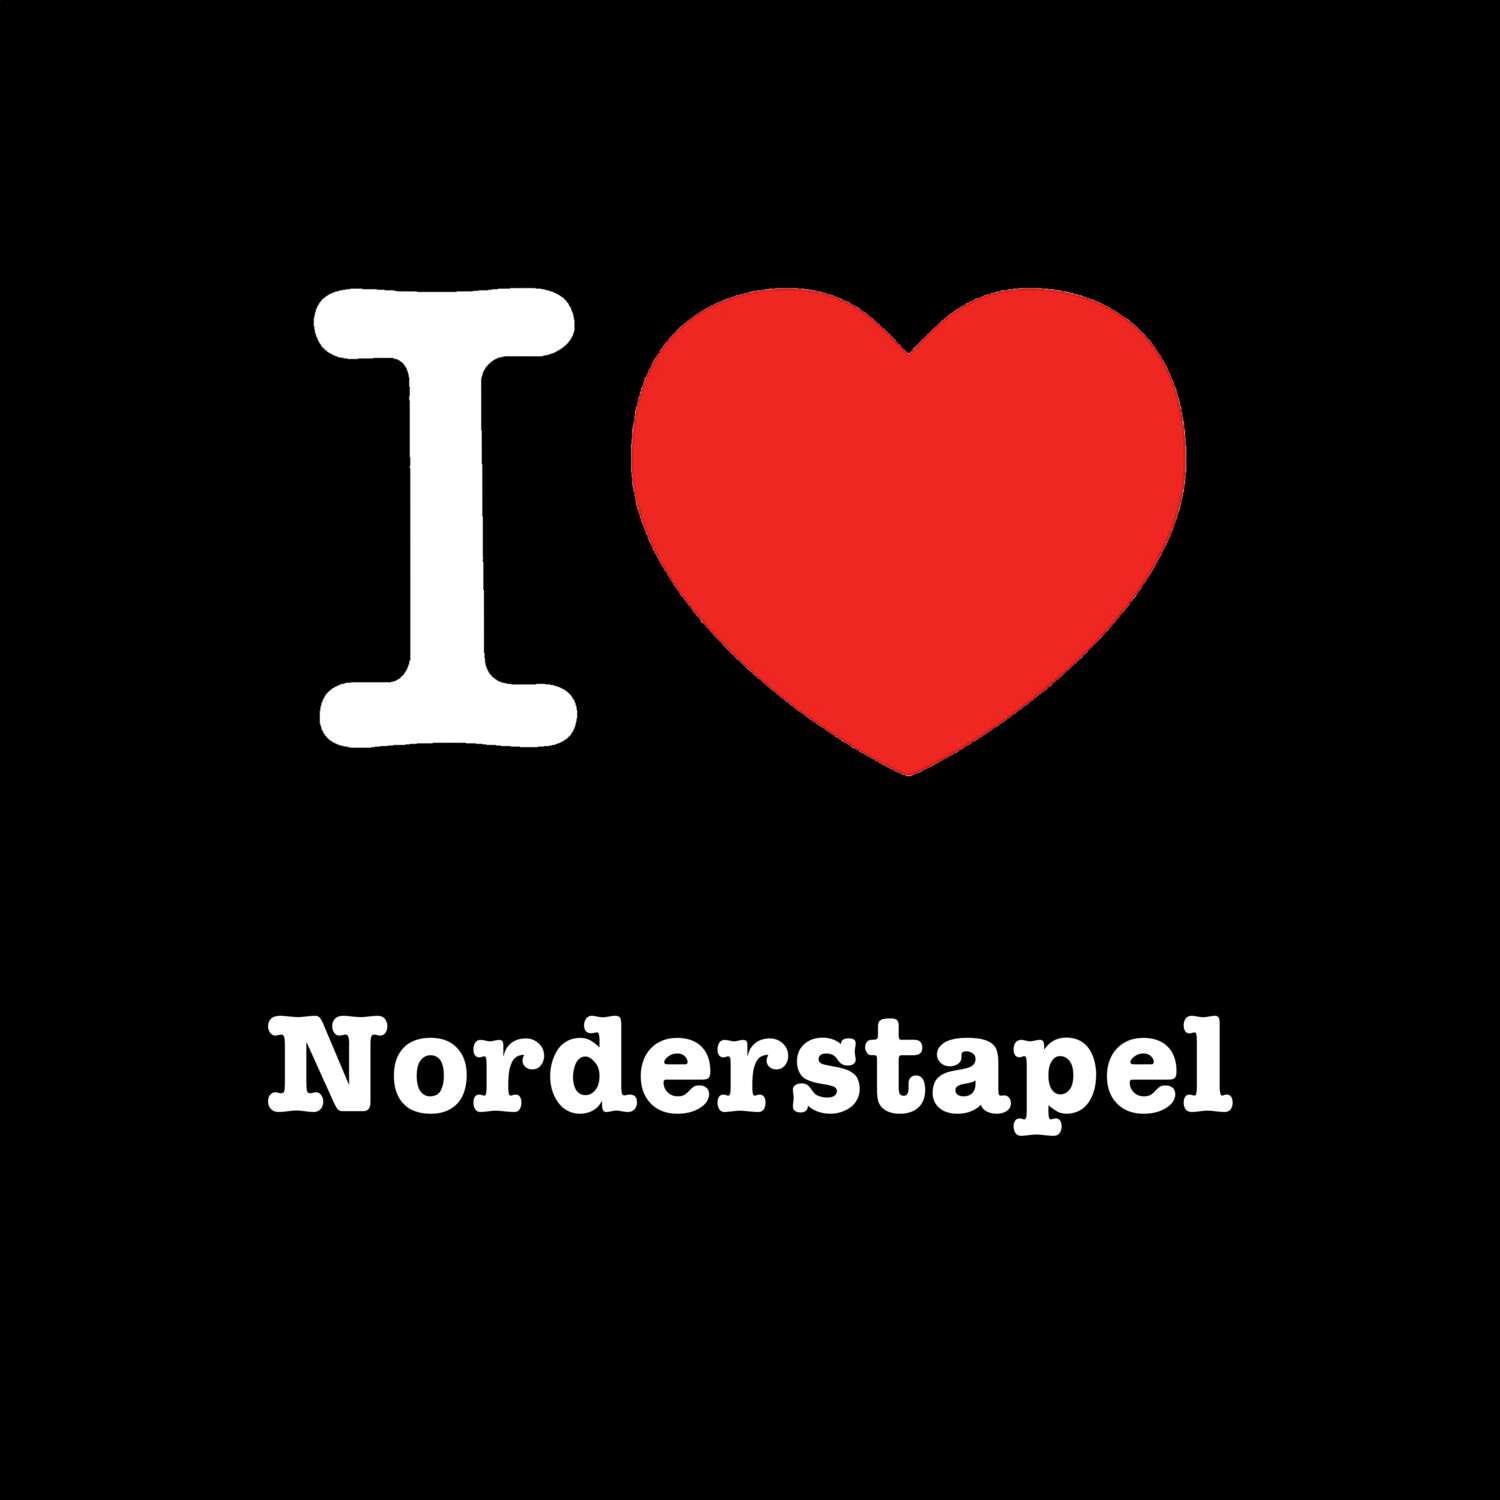 Norderstapel T-Shirt »I love«